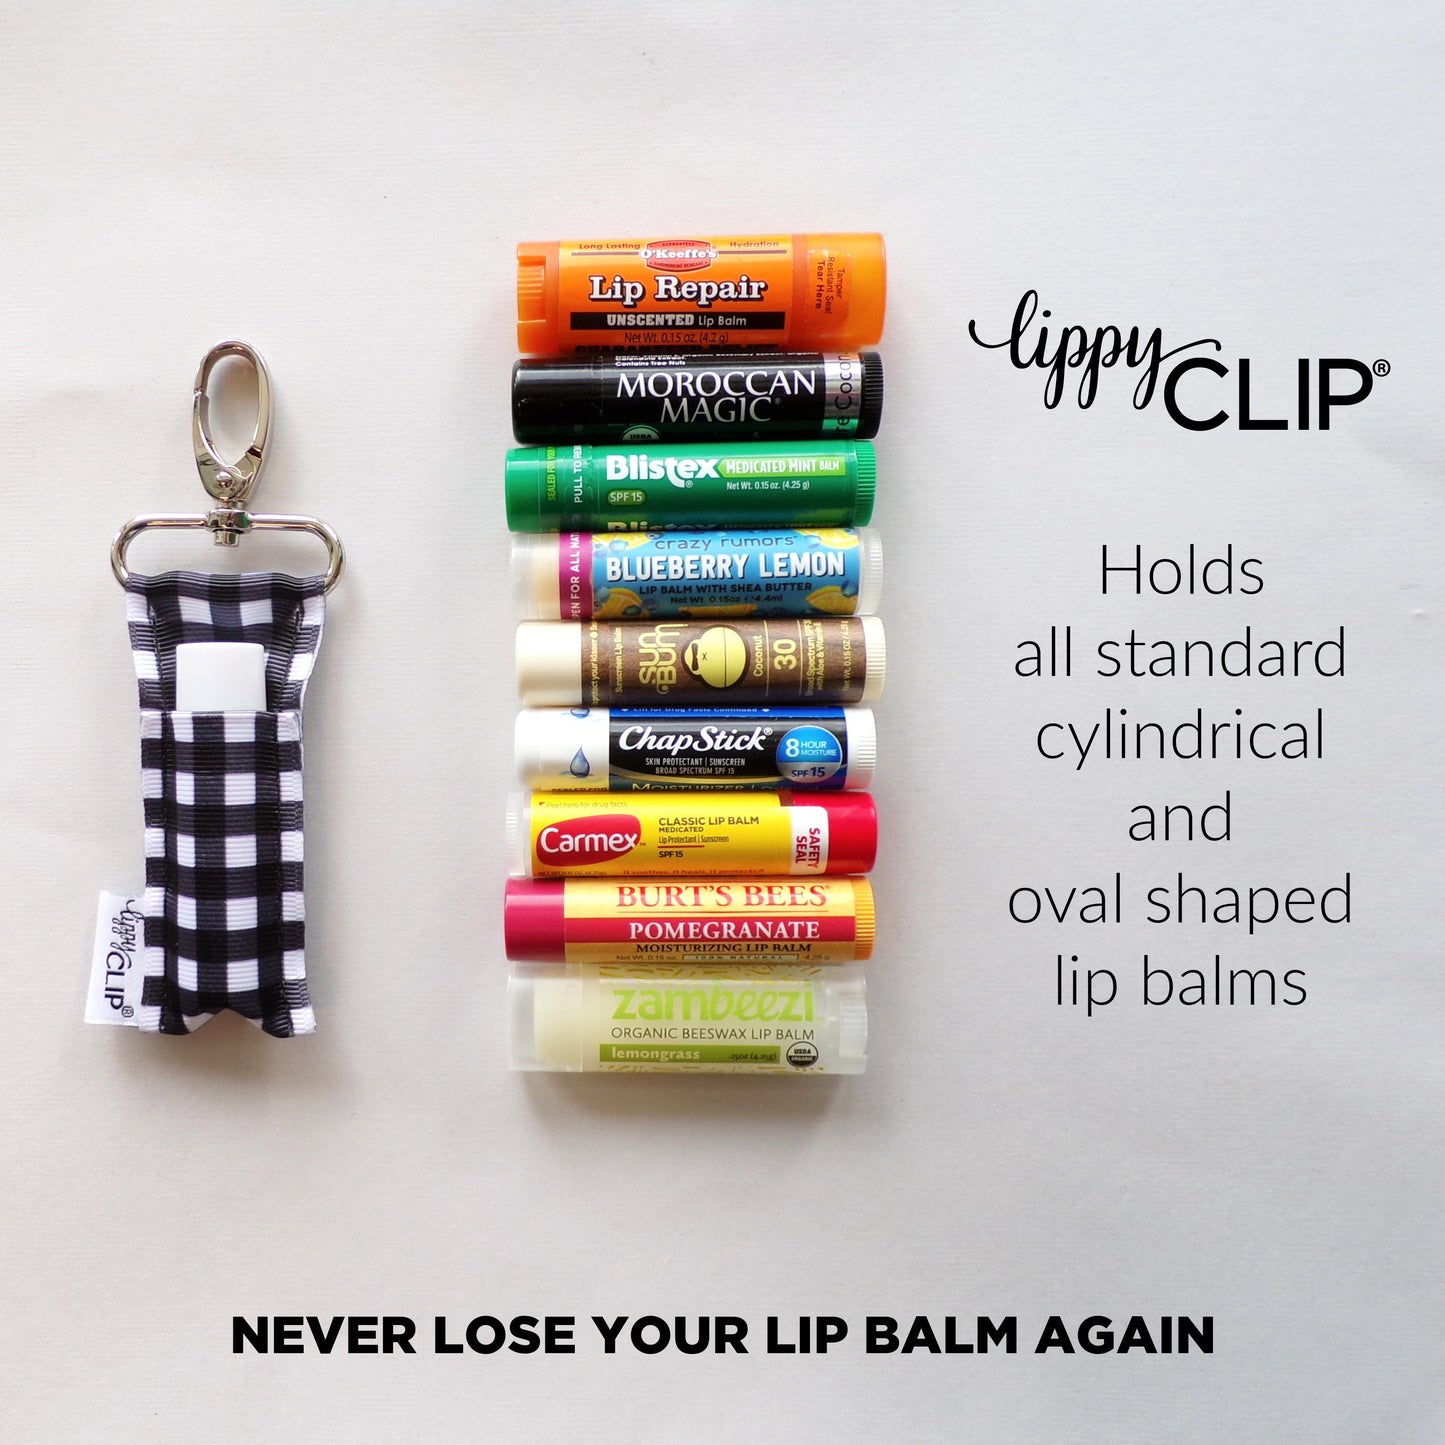 Sparkling Snowflakes LippyClip® Lip Balm Holder